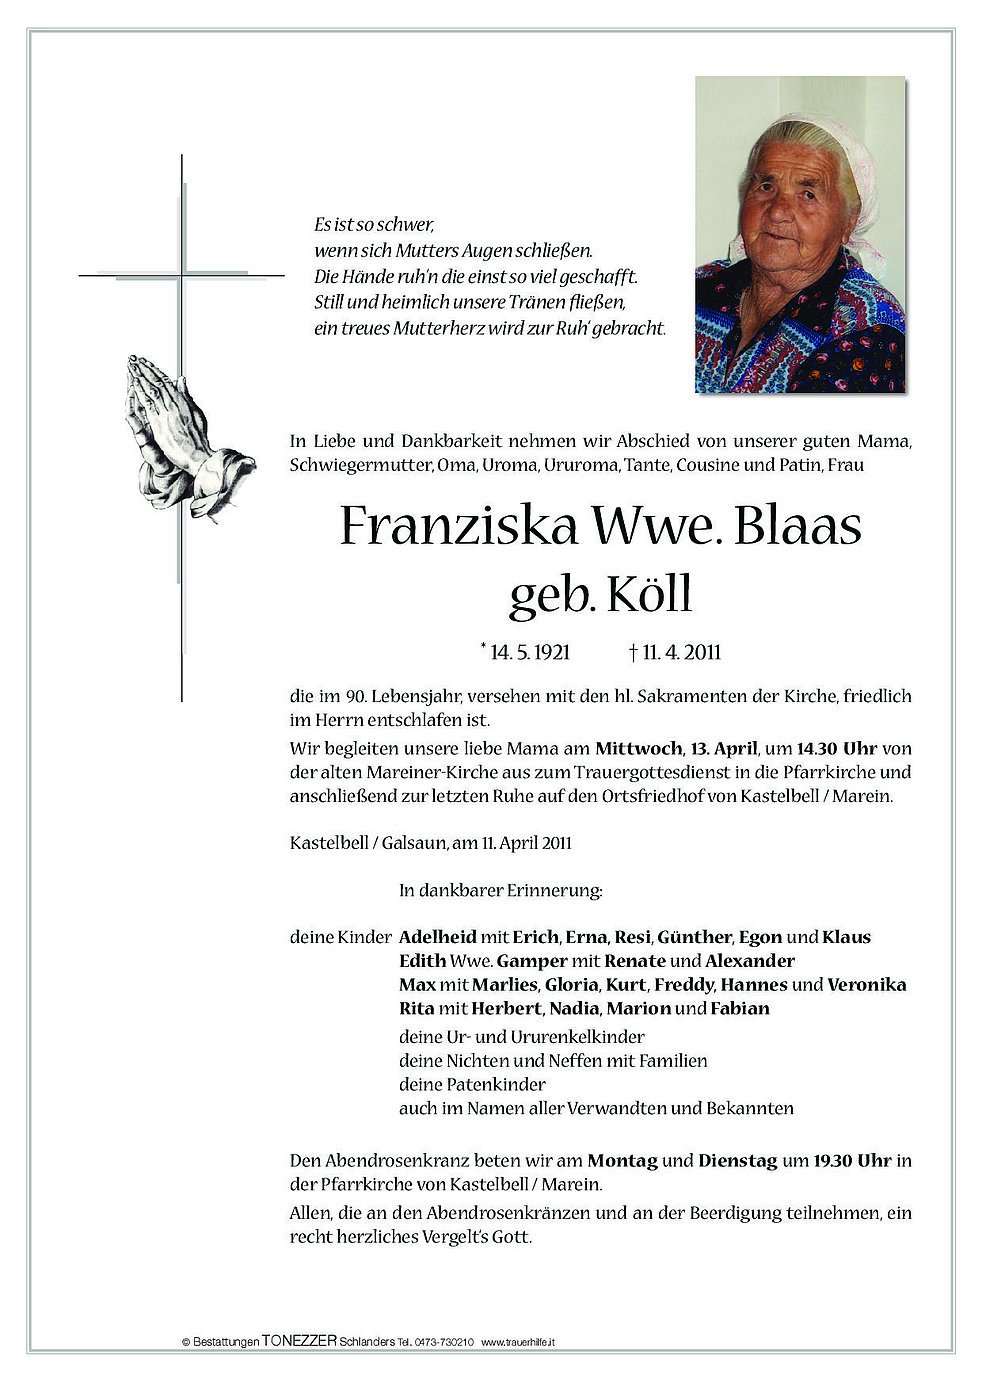 Franziska Wwe Blaas Aus Kastelbell Tschars Trauerhilfeit Das Südtiroler Gedenkportal 